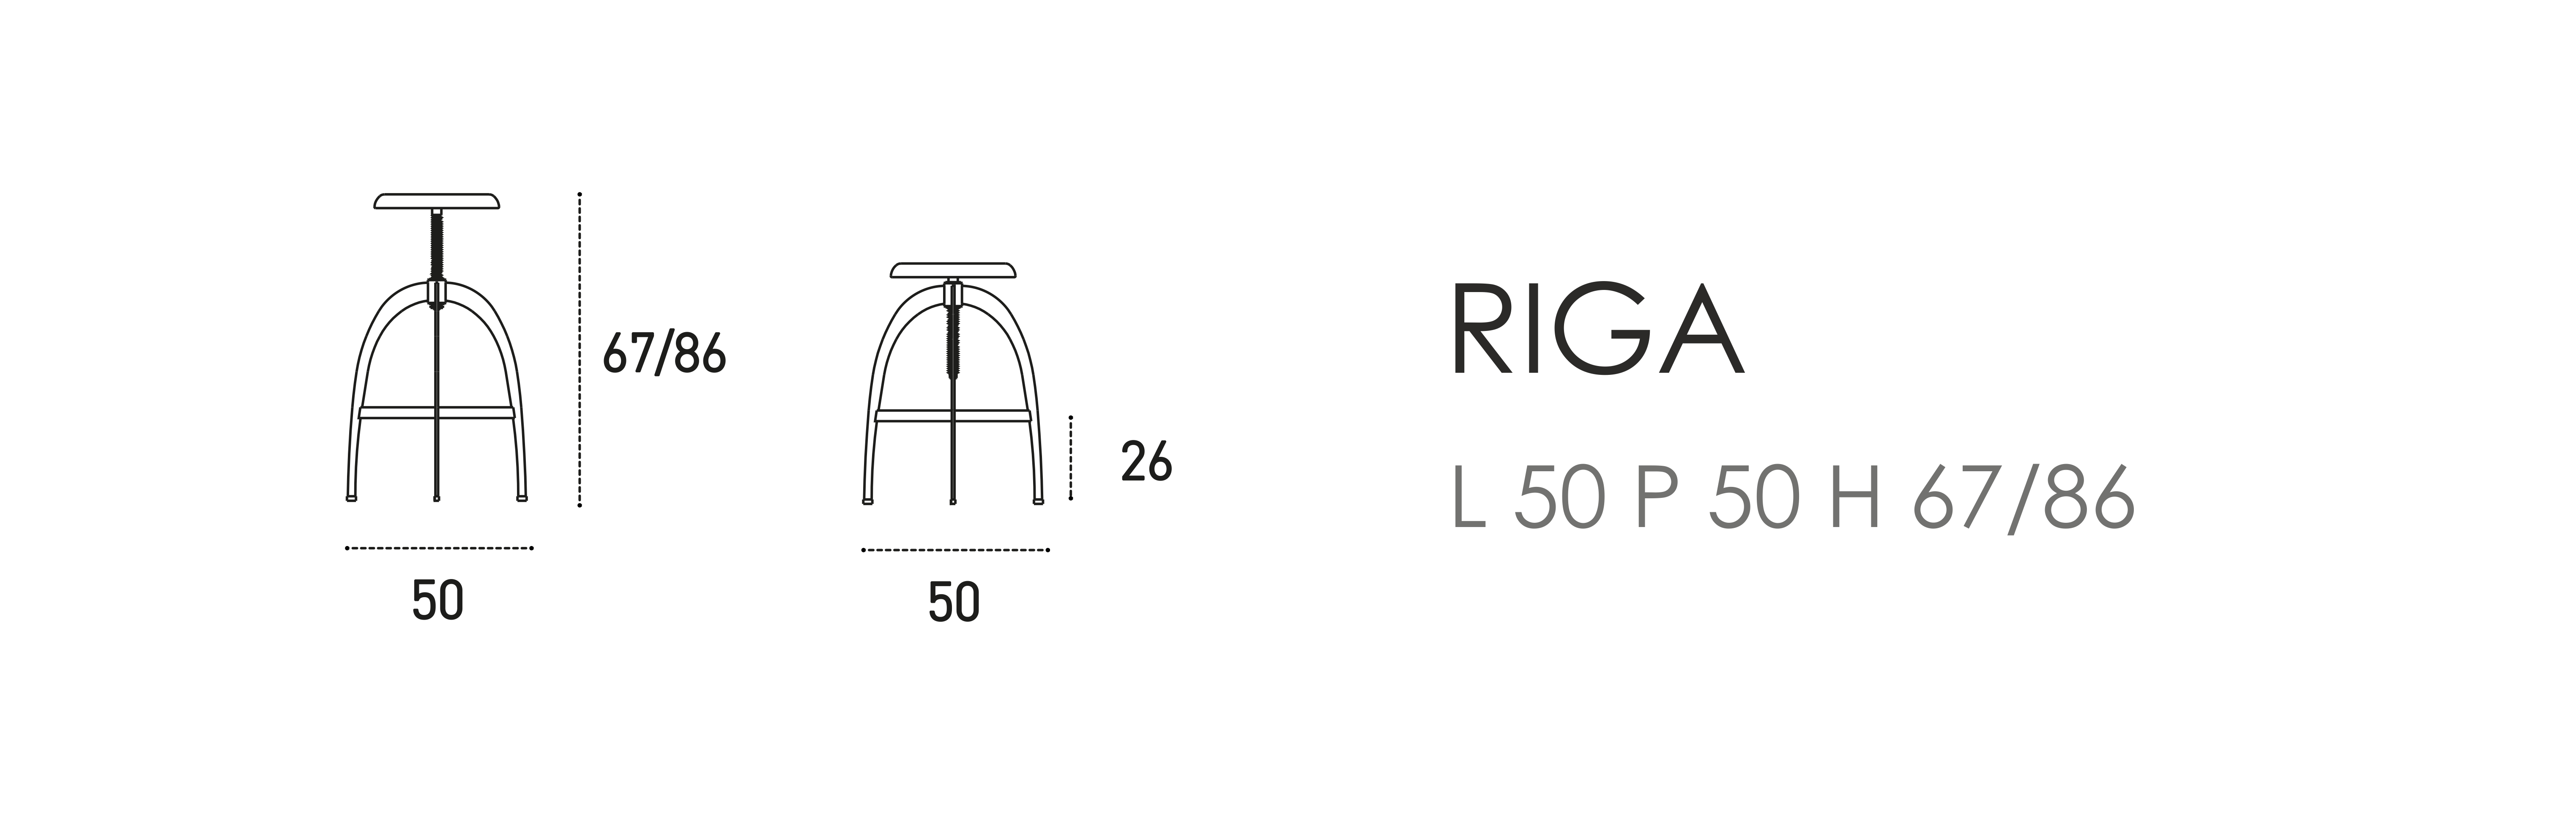 Riga L 50 P 50 H 67/86